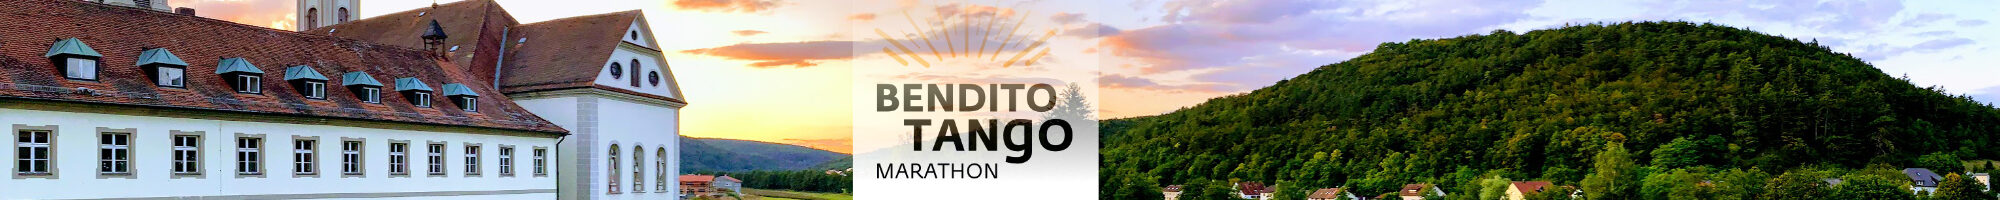 bendito tango marathon